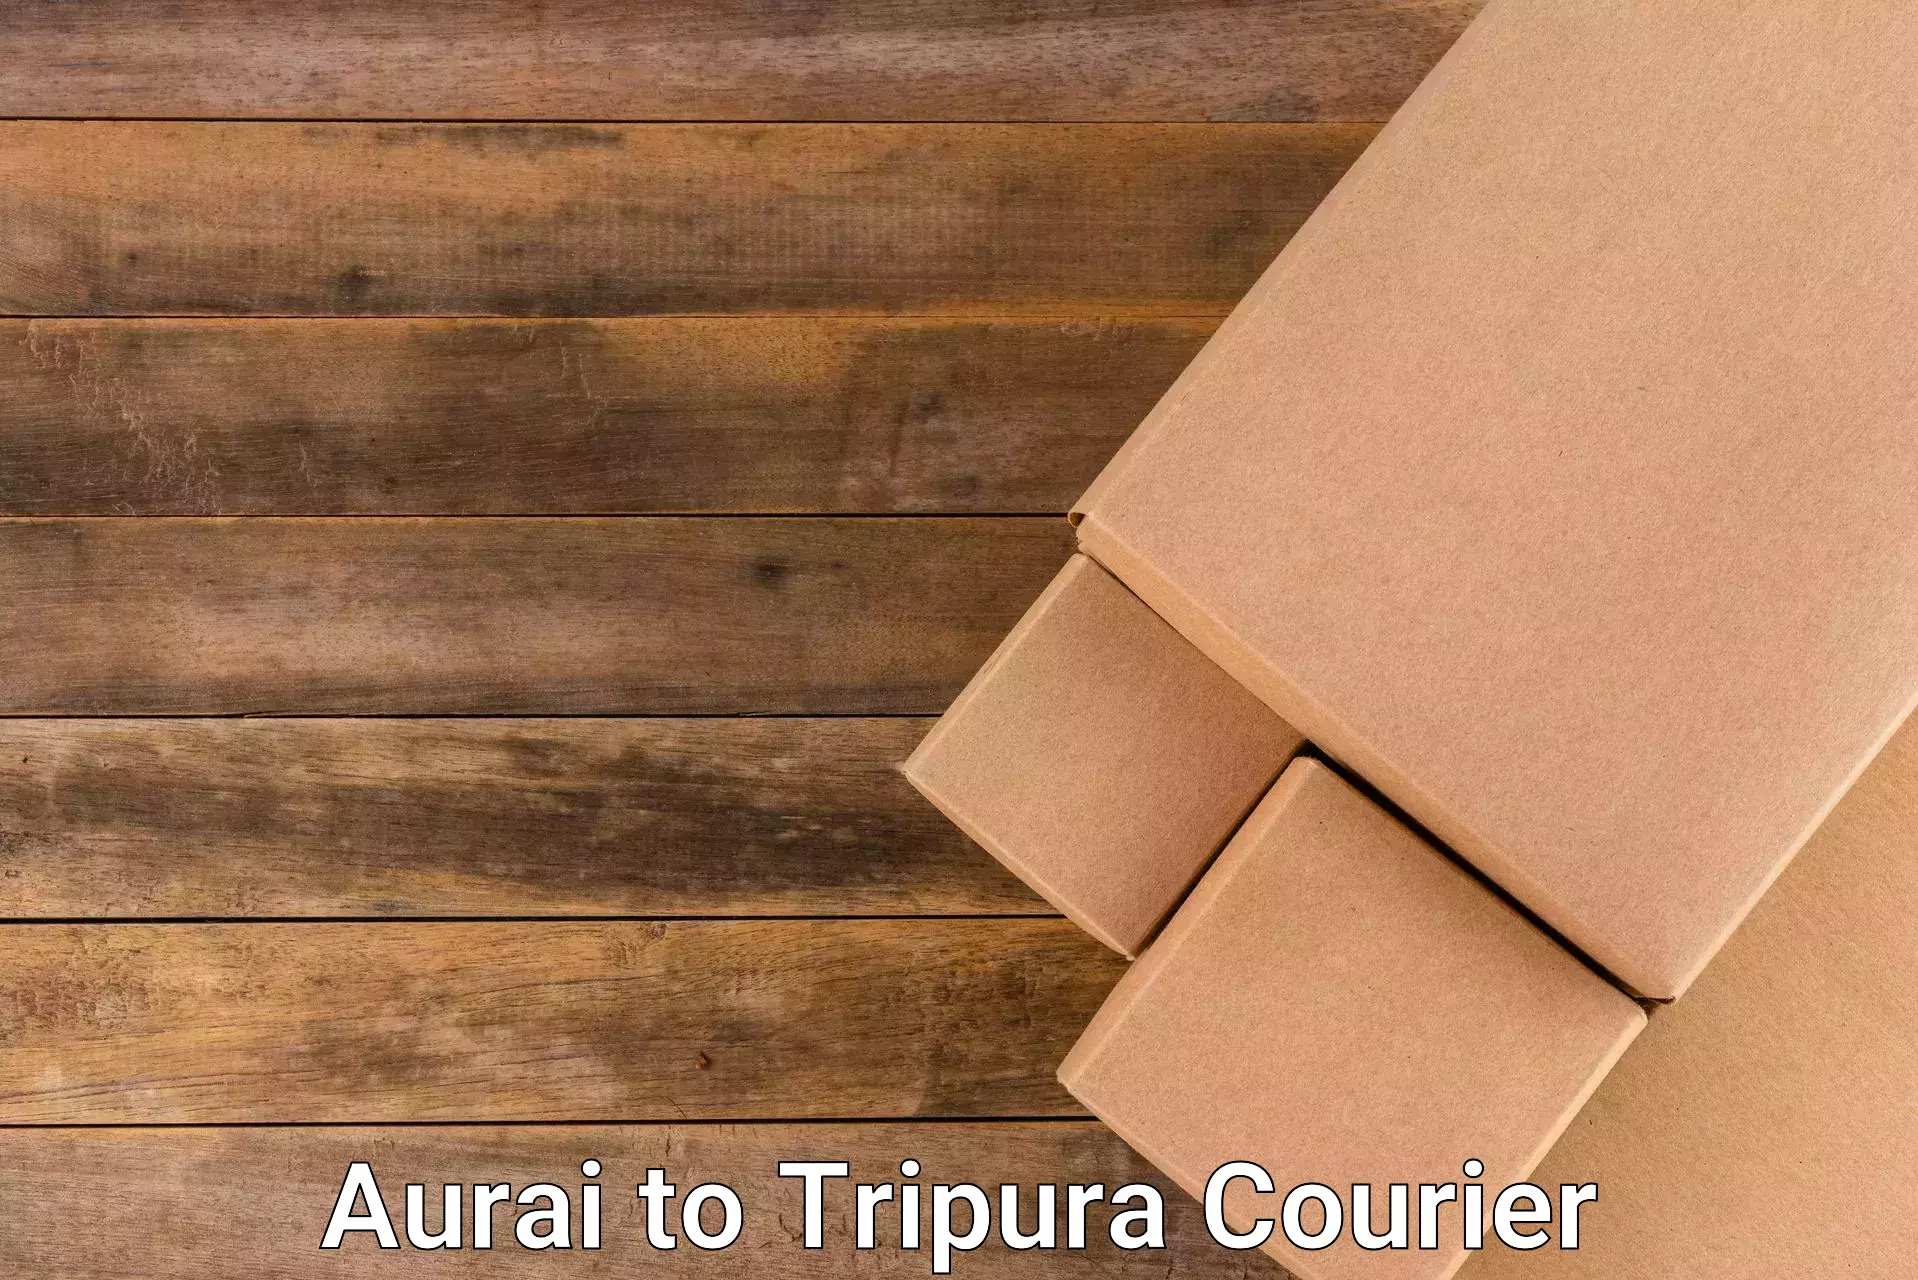 Efficient order fulfillment in Aurai to Udaipur Tripura